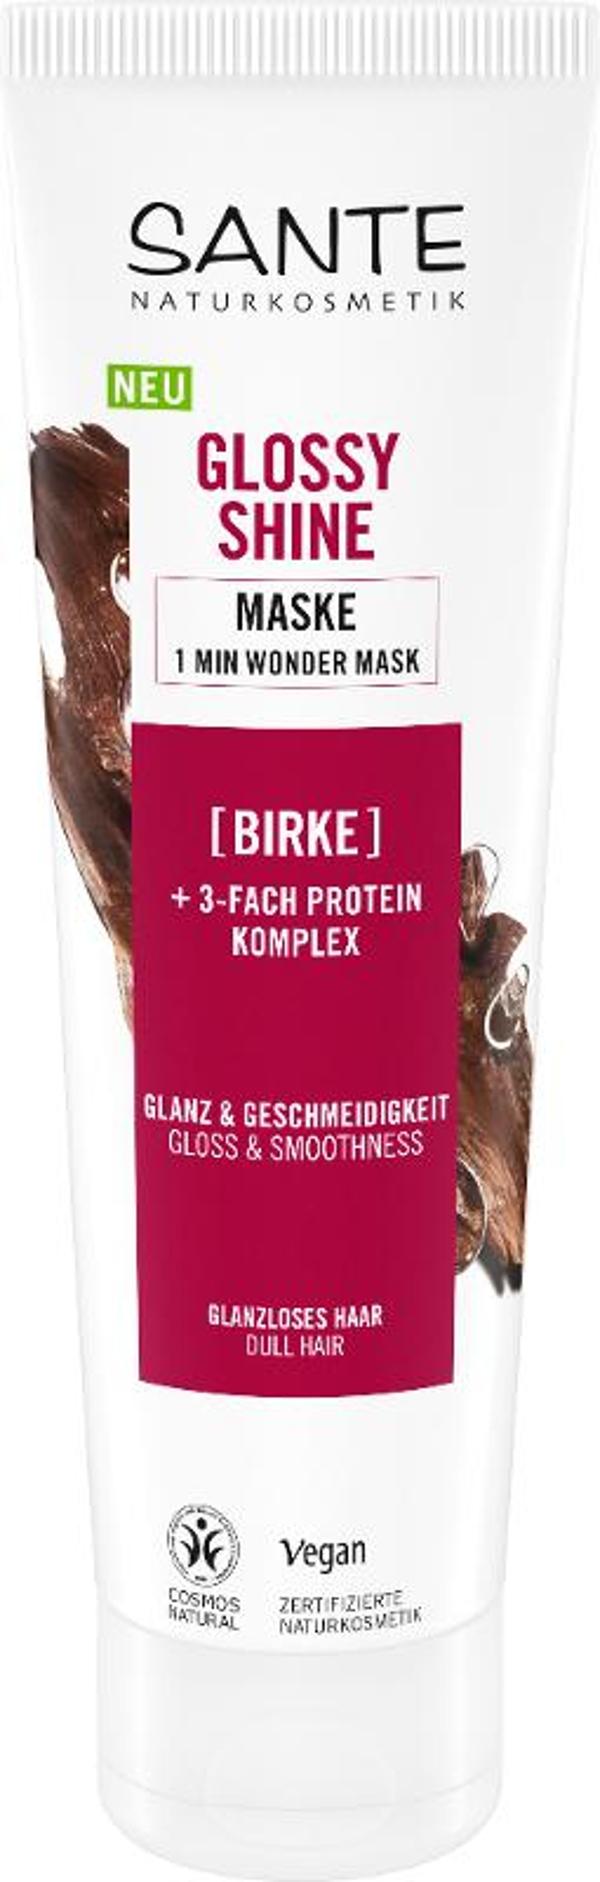 Produktfoto zu Glossy Shine Haarmaske Birke 150ml Sante